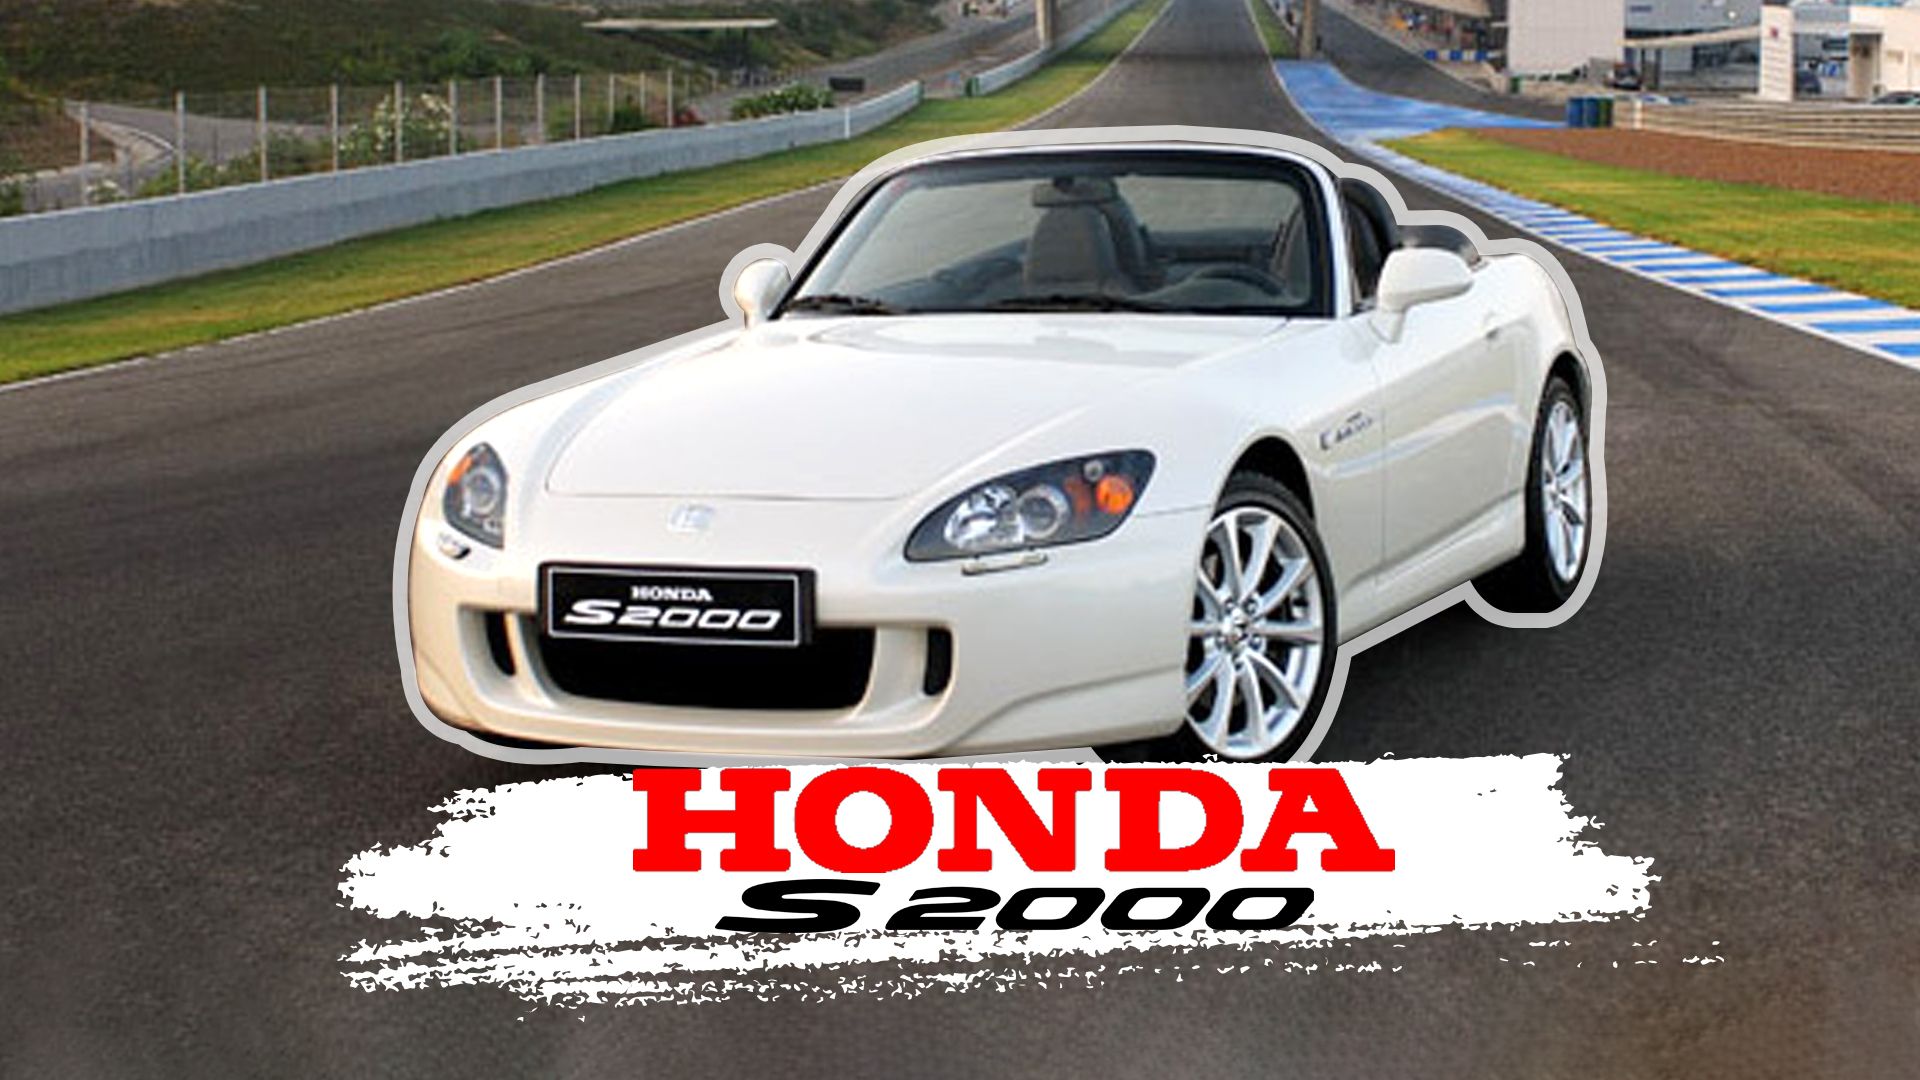 Honda S2000 Performance Price And Photos